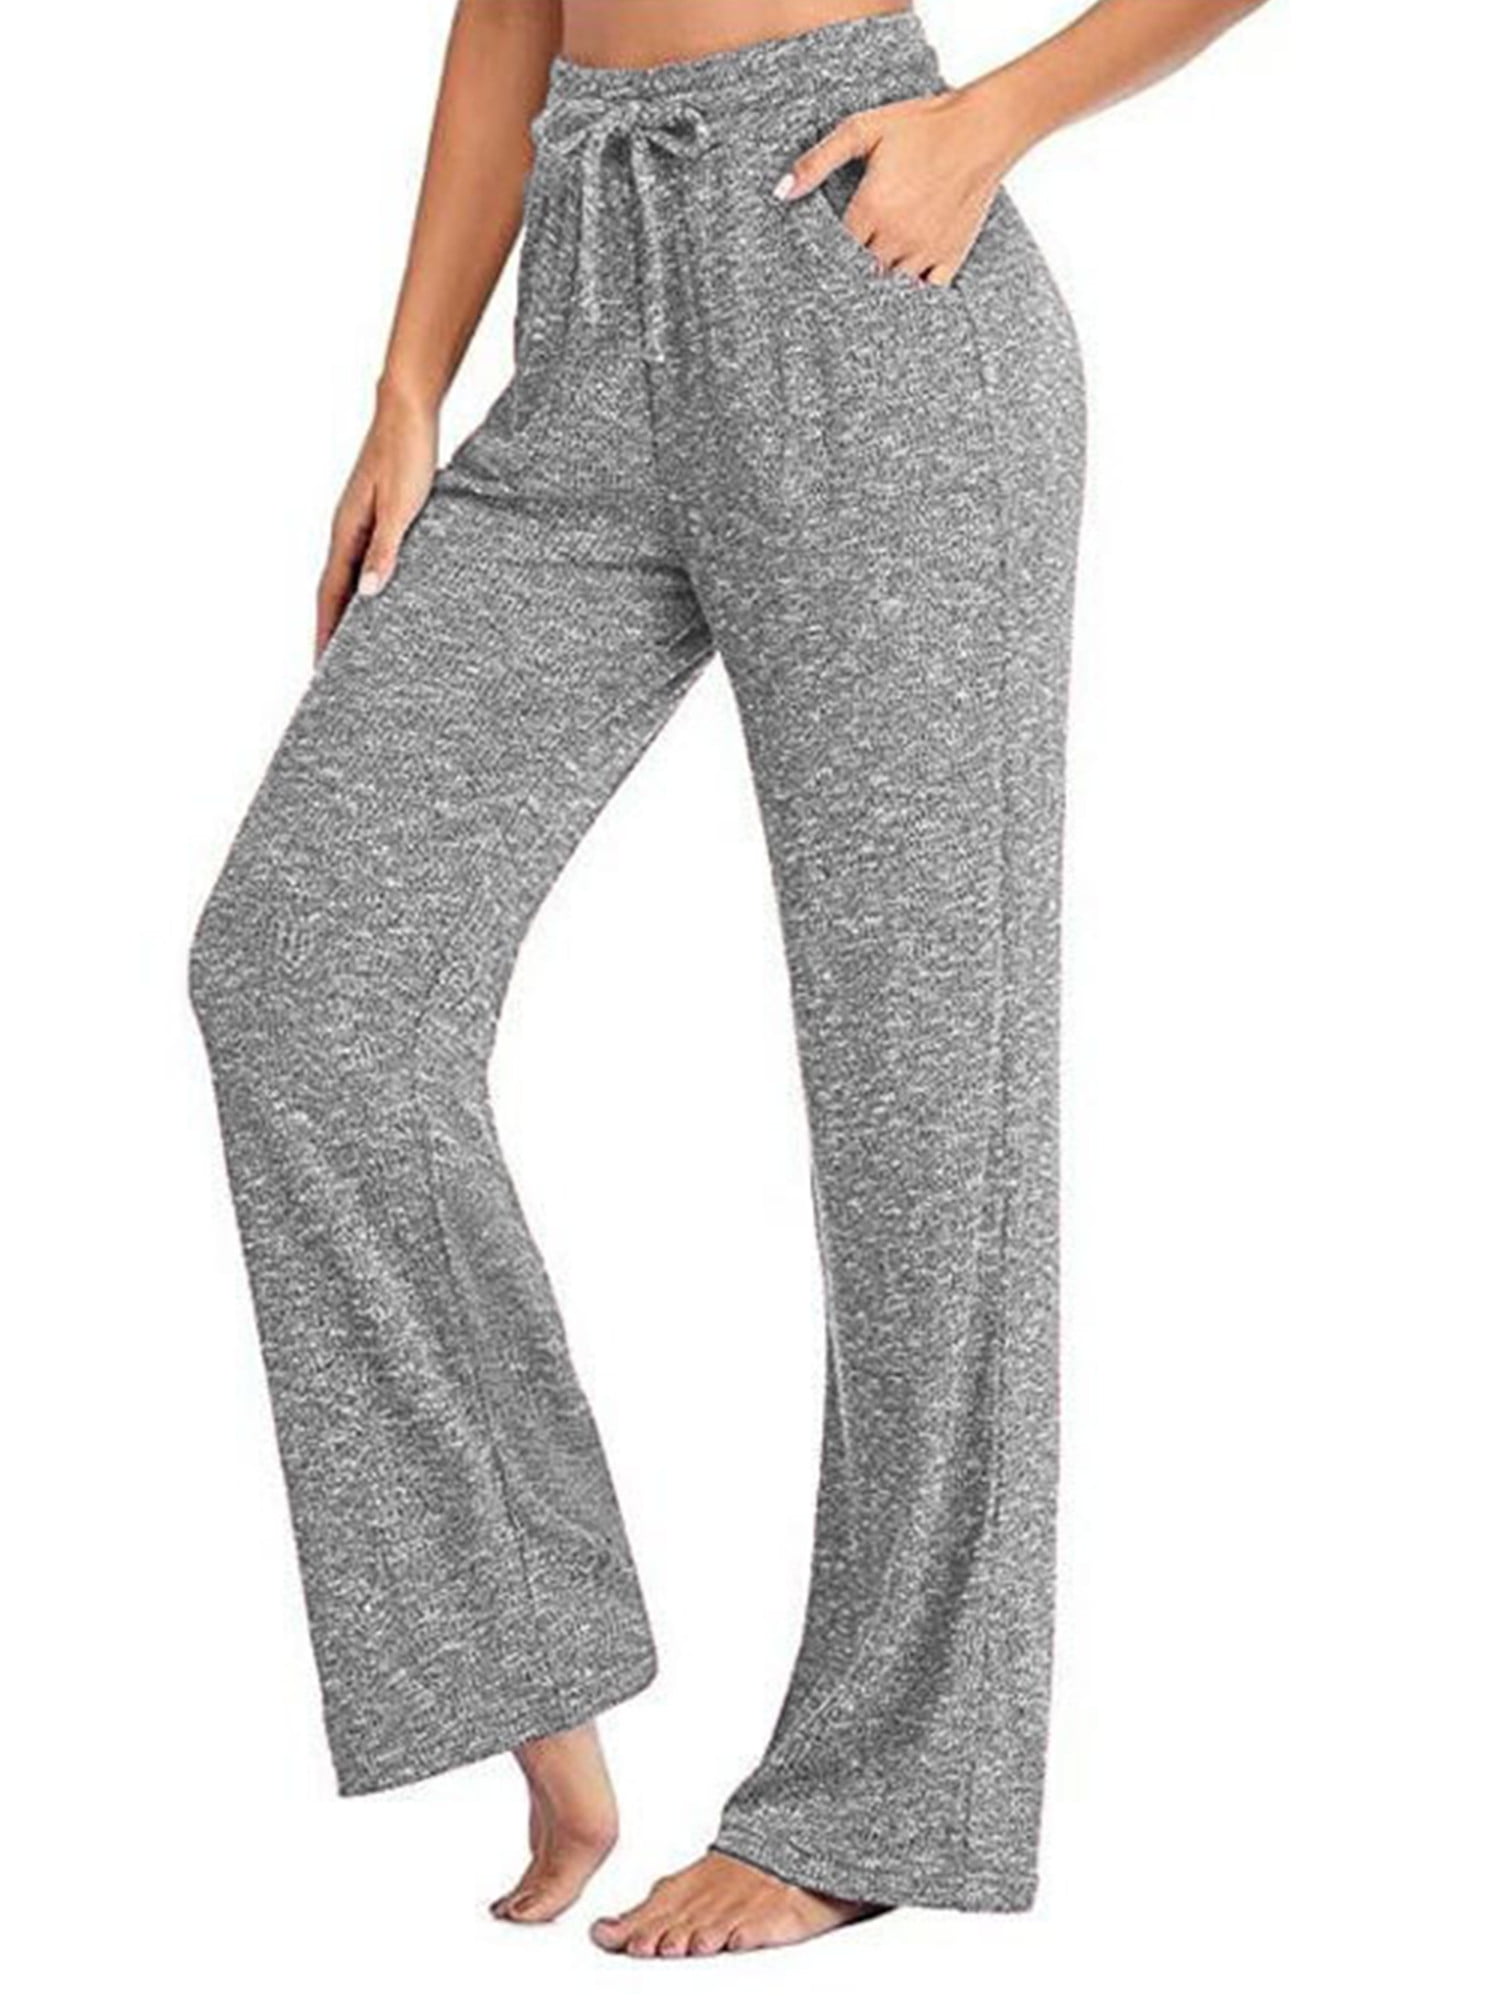 Women's Pyjamas Bottoms Pajamas Pants Drawstring Floral Print Pyjamas Bottoms Cropped Lounge Pants with Side Pockets 